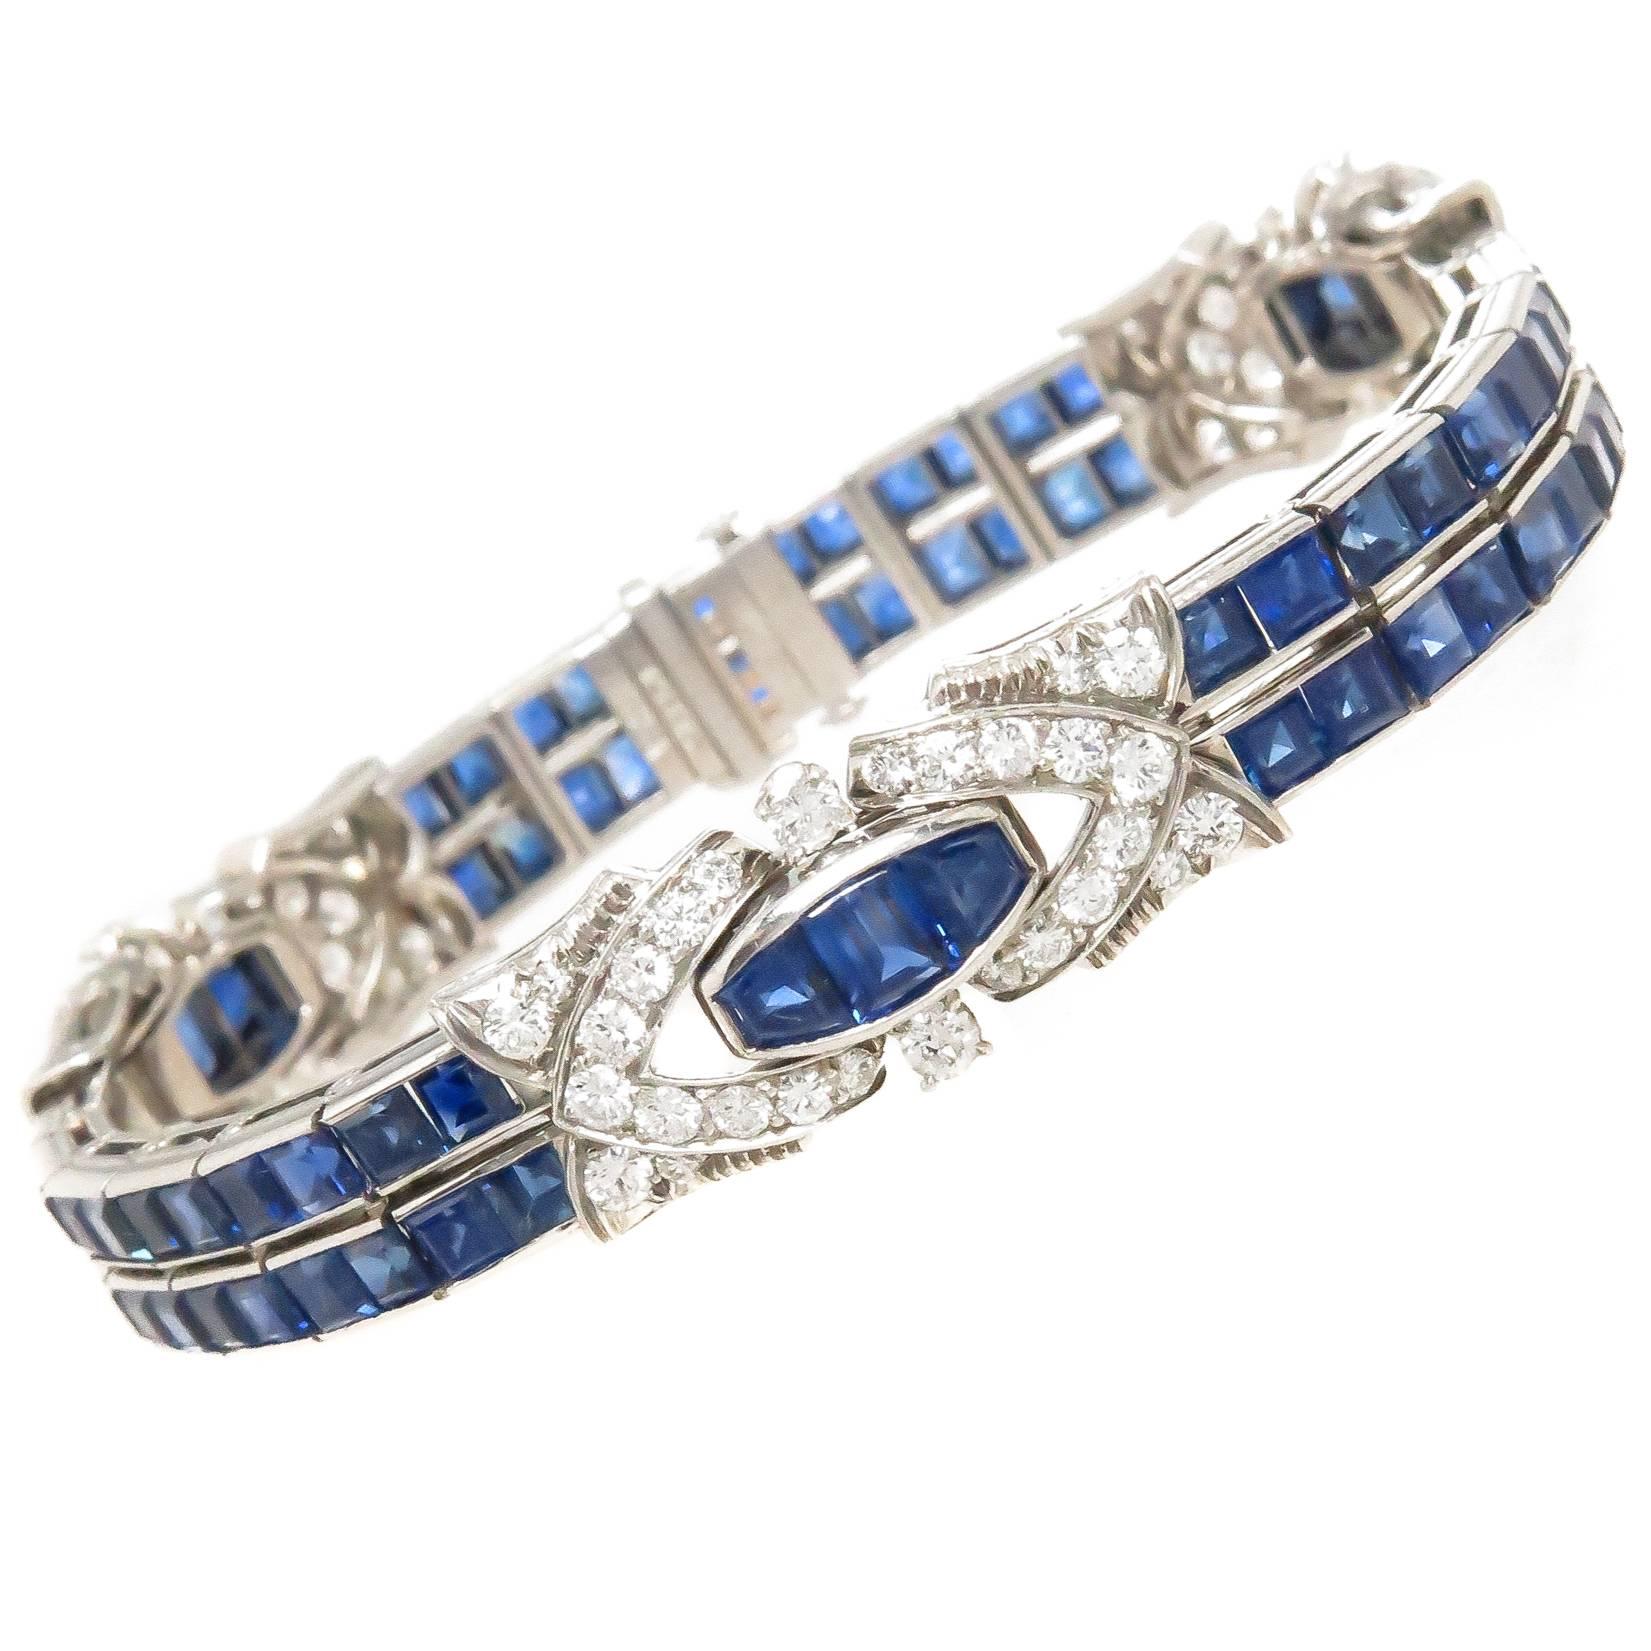 Oscar Heyman Art Deco Platinum Diamond and Sapphire Bracelet